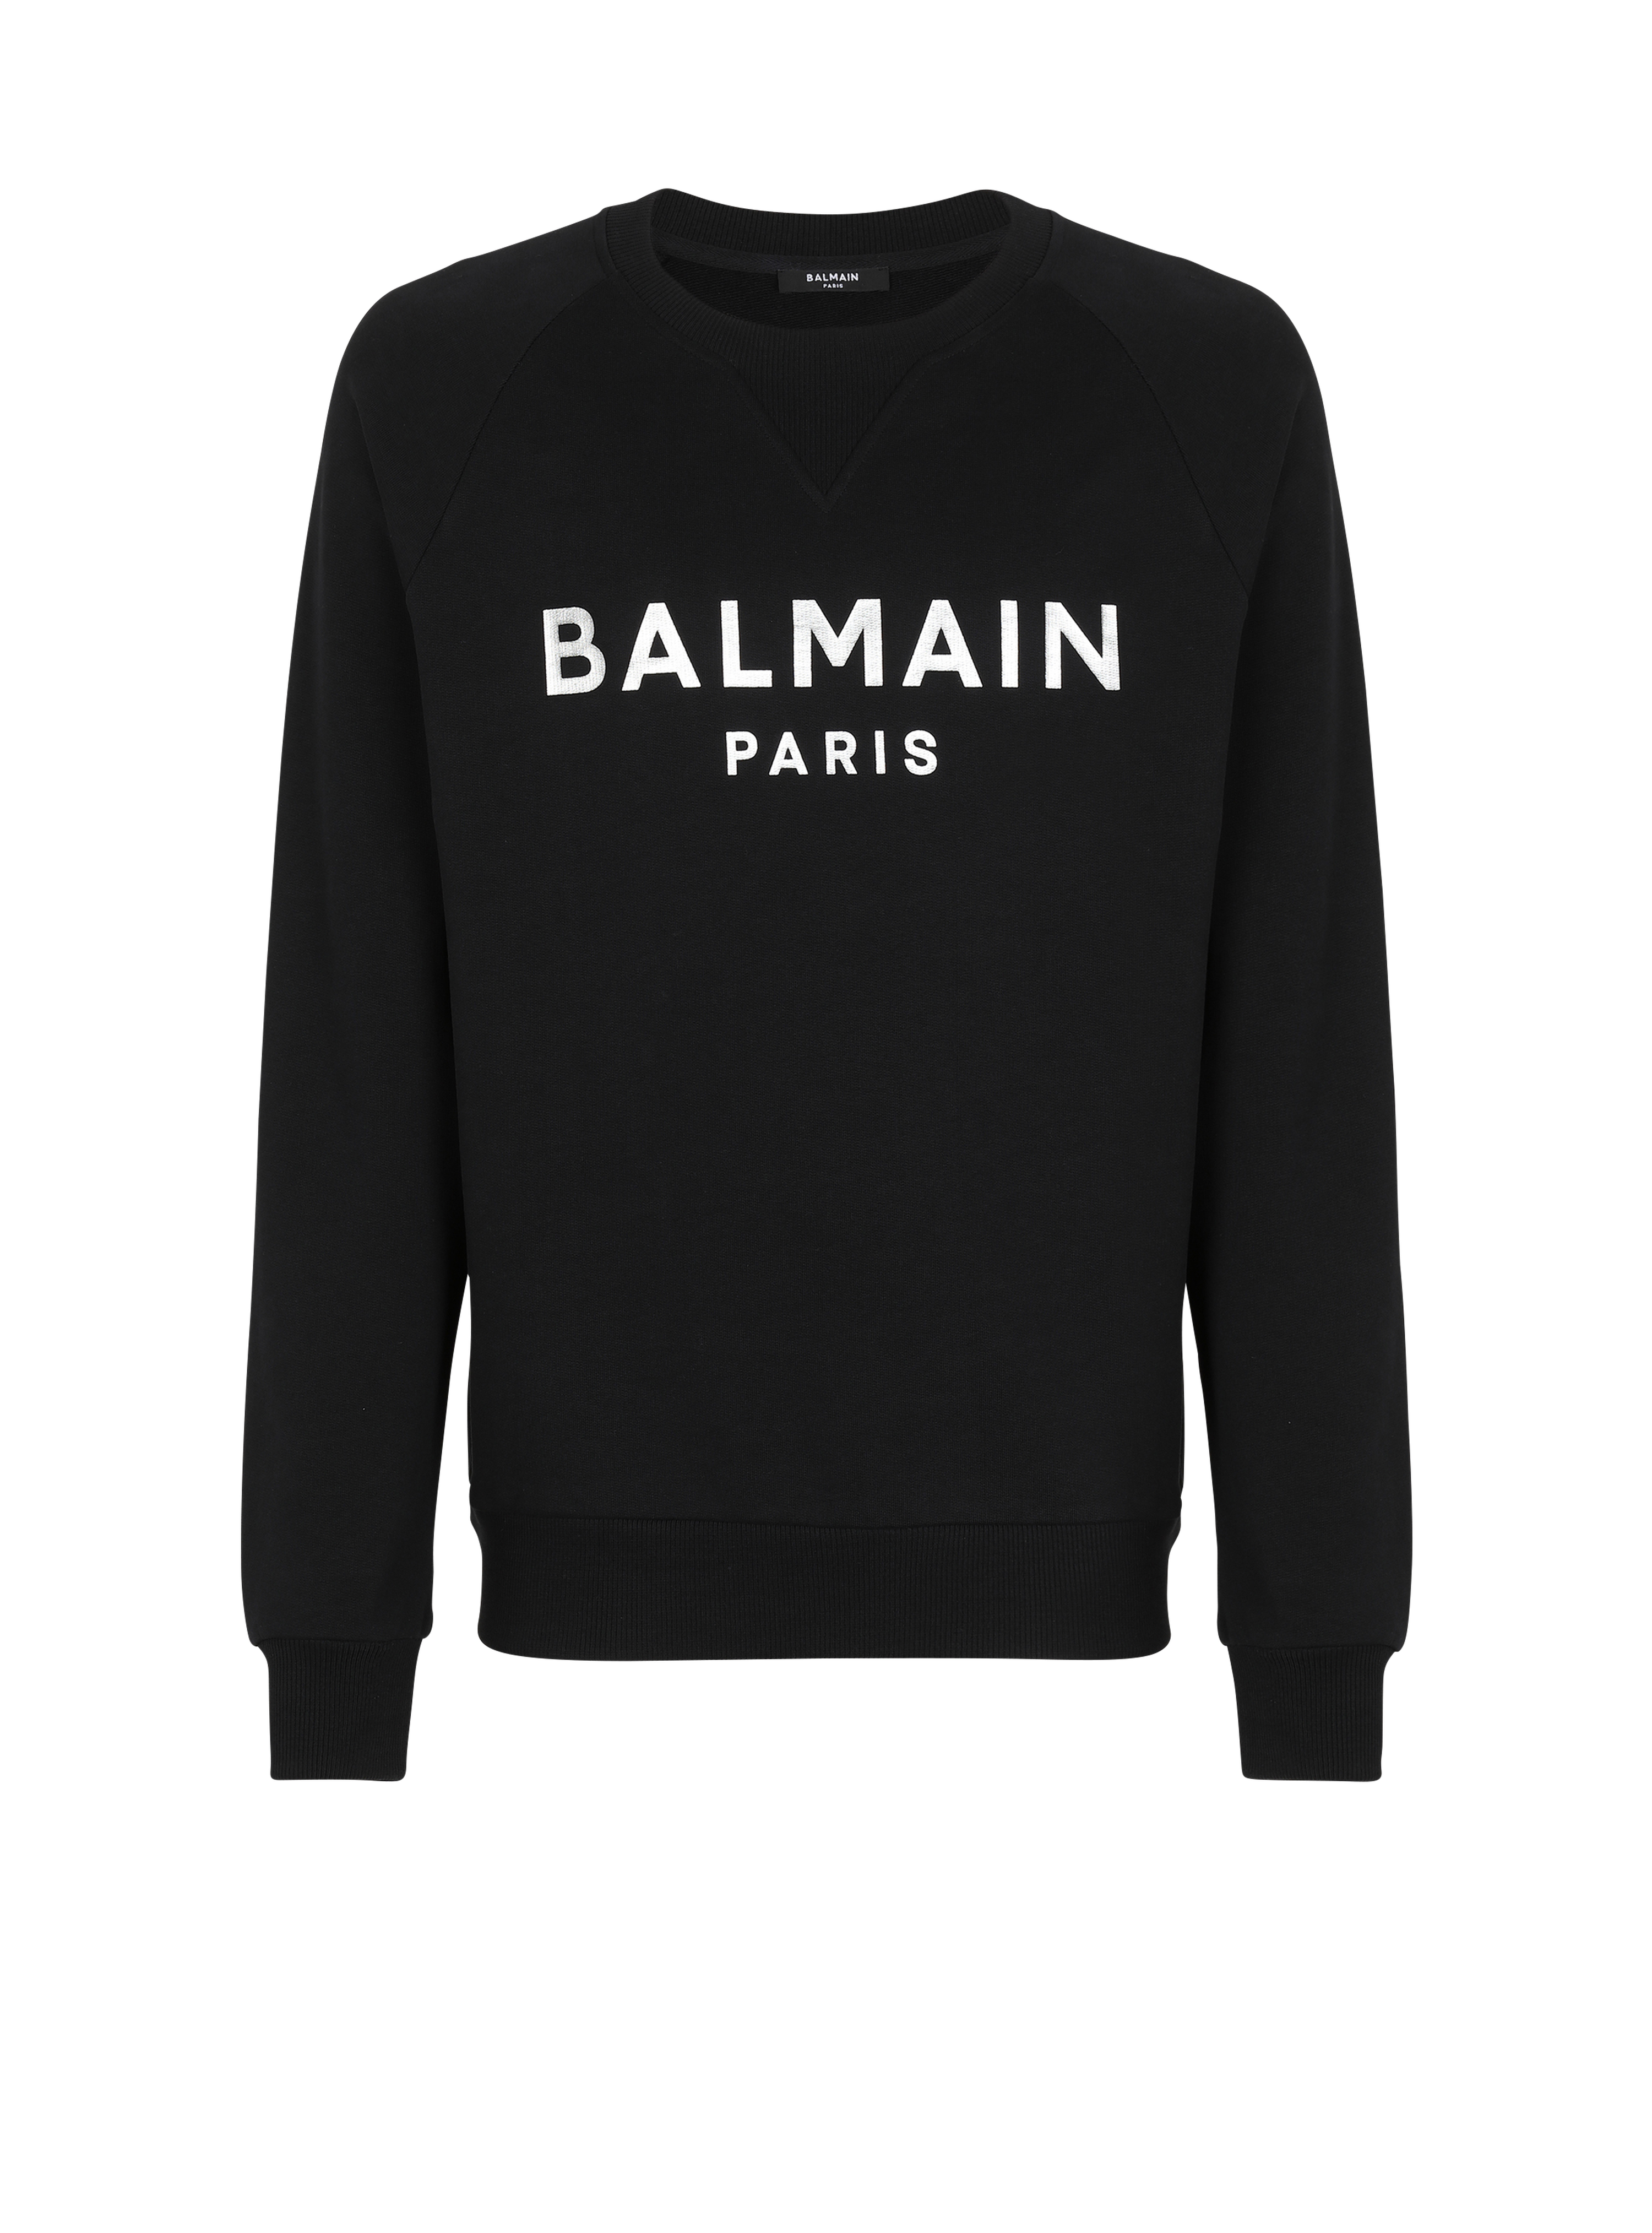 Sweatshirt aus Baumwolle mit „Balmain Paris”-Logo-Print in Metallic-Optik, schwarz